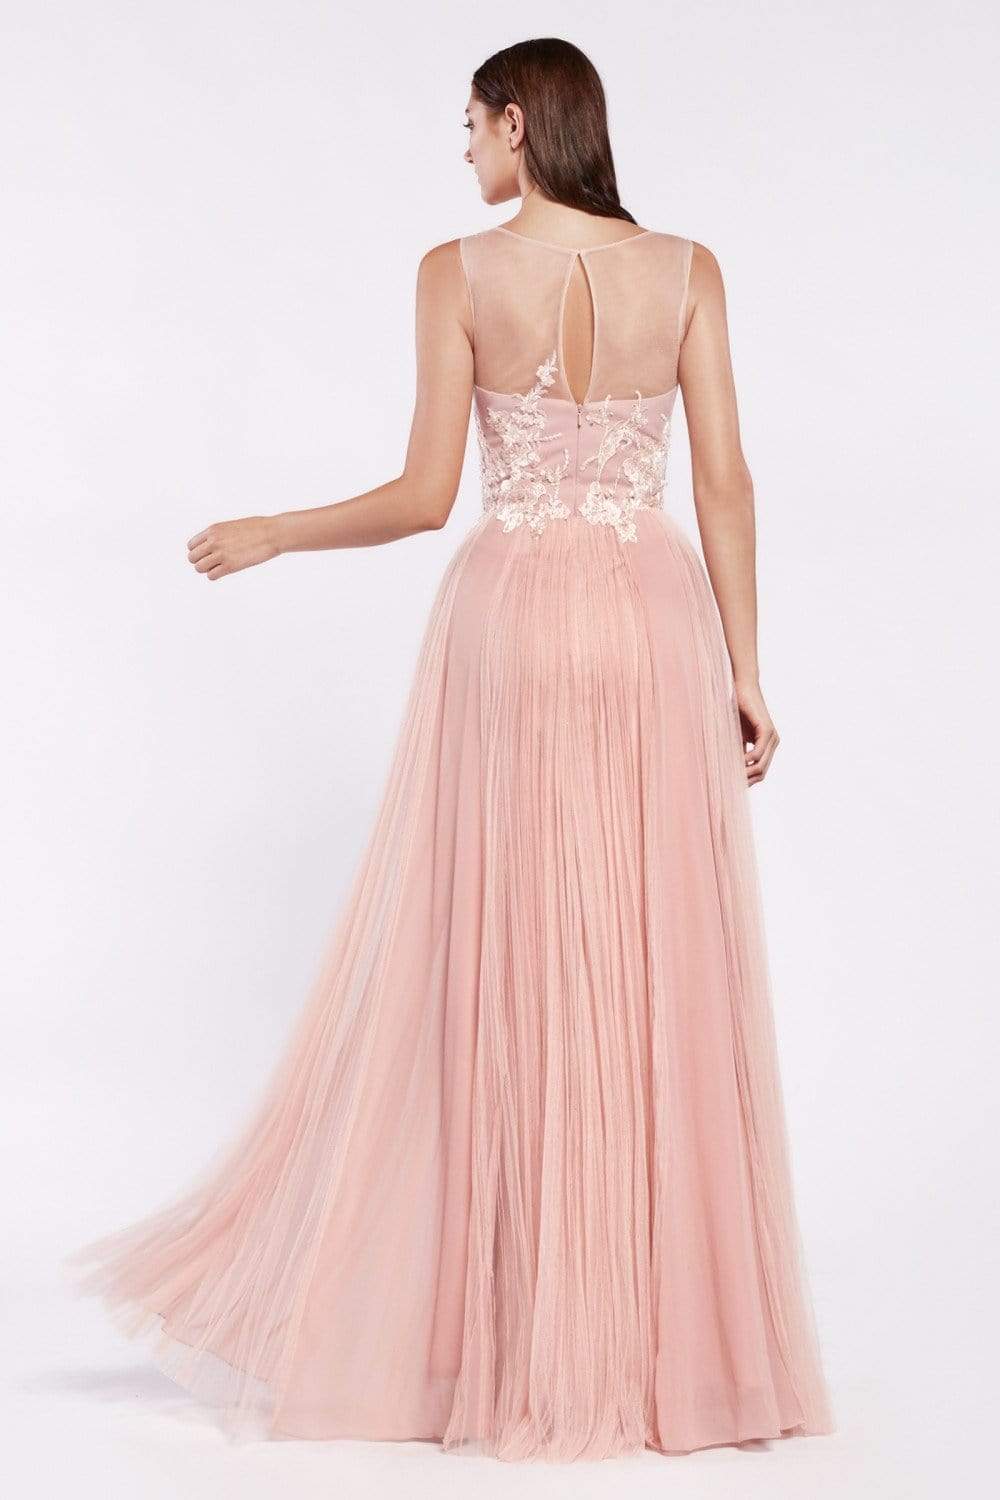 Cinderella Divine - CJ528 Lace V-neck Tulle A-line Gown Evening Dresses